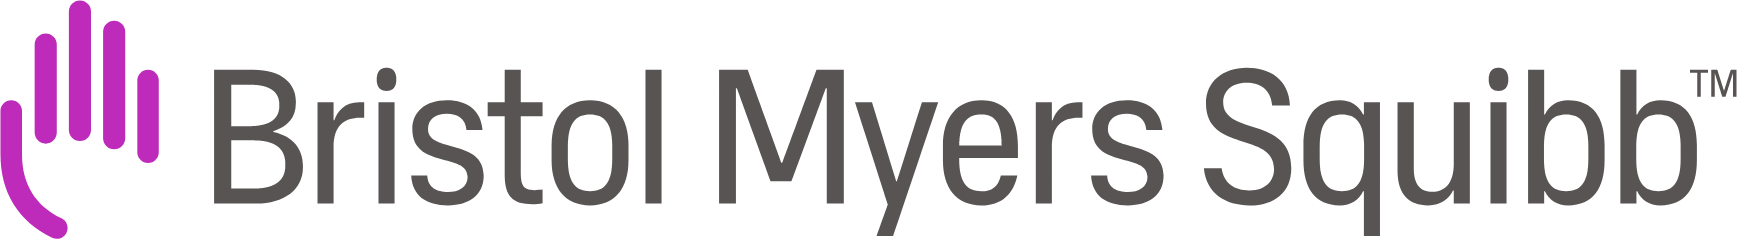 Bristol-Myers Squibb logo large (transparent PNG)